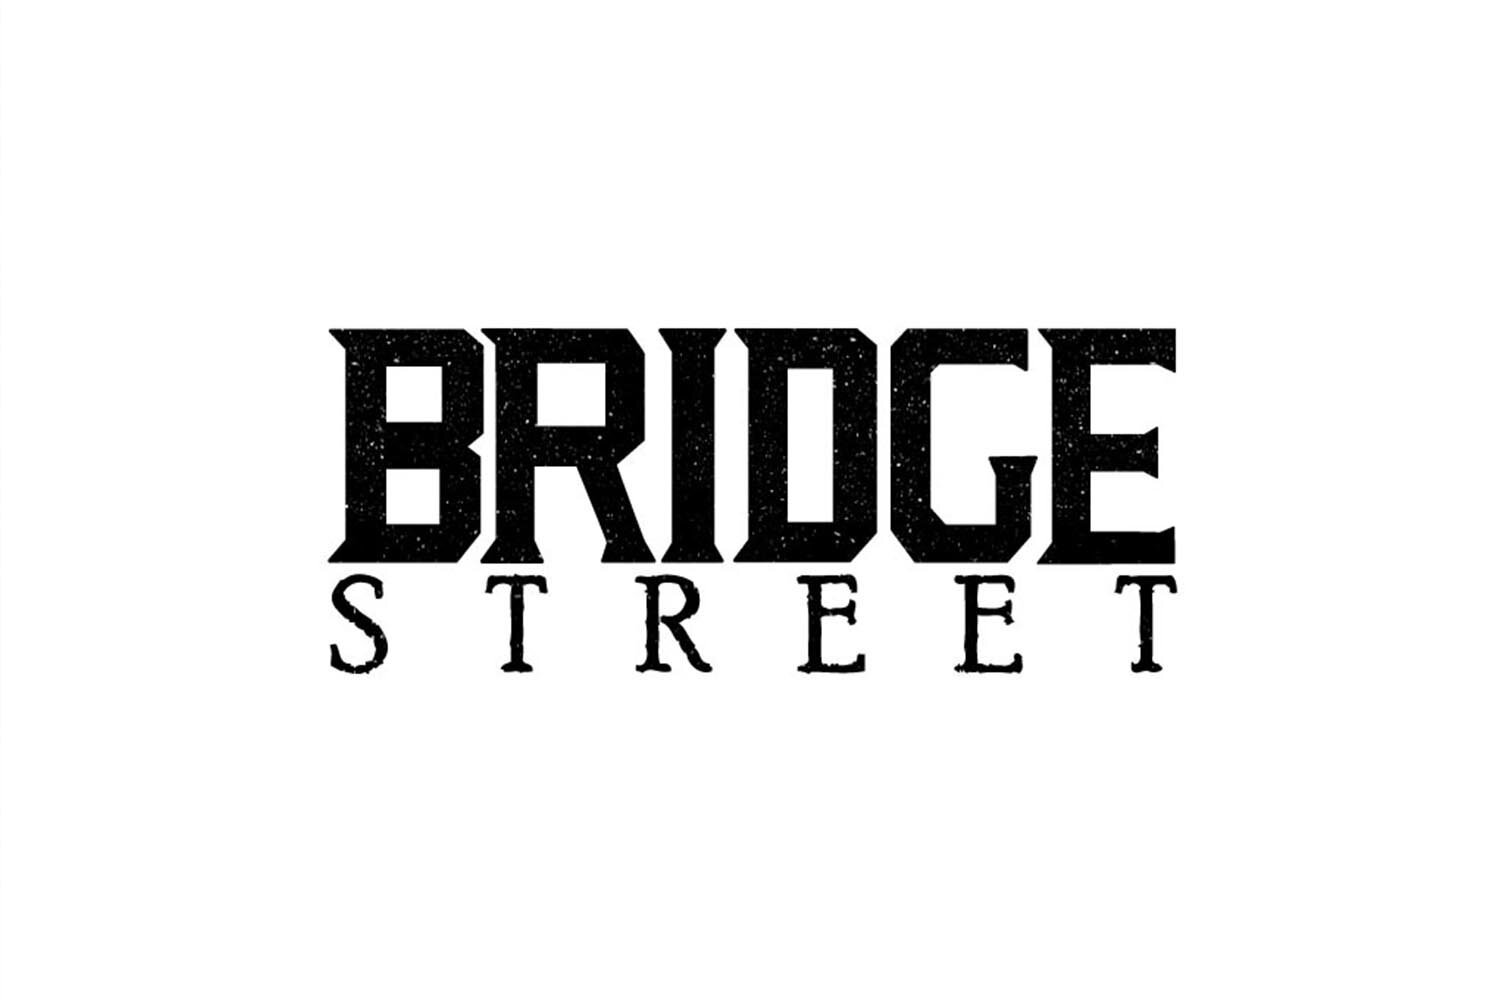 web bridge logo1.jpg